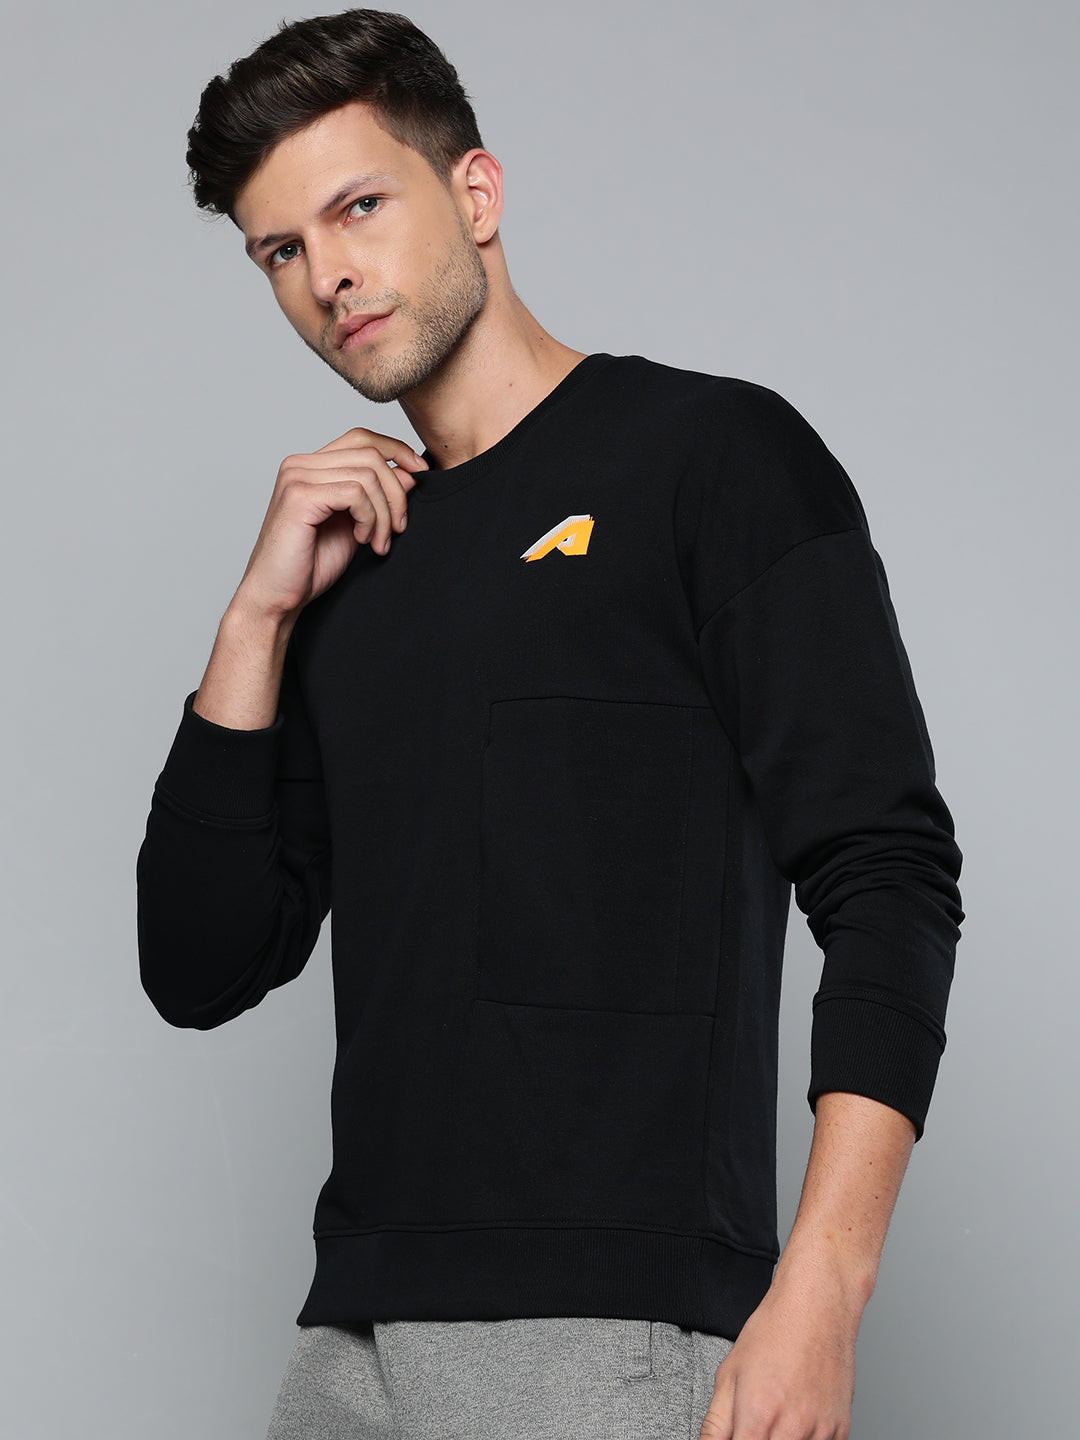 Alcis Men Black Solid Sweatshirt